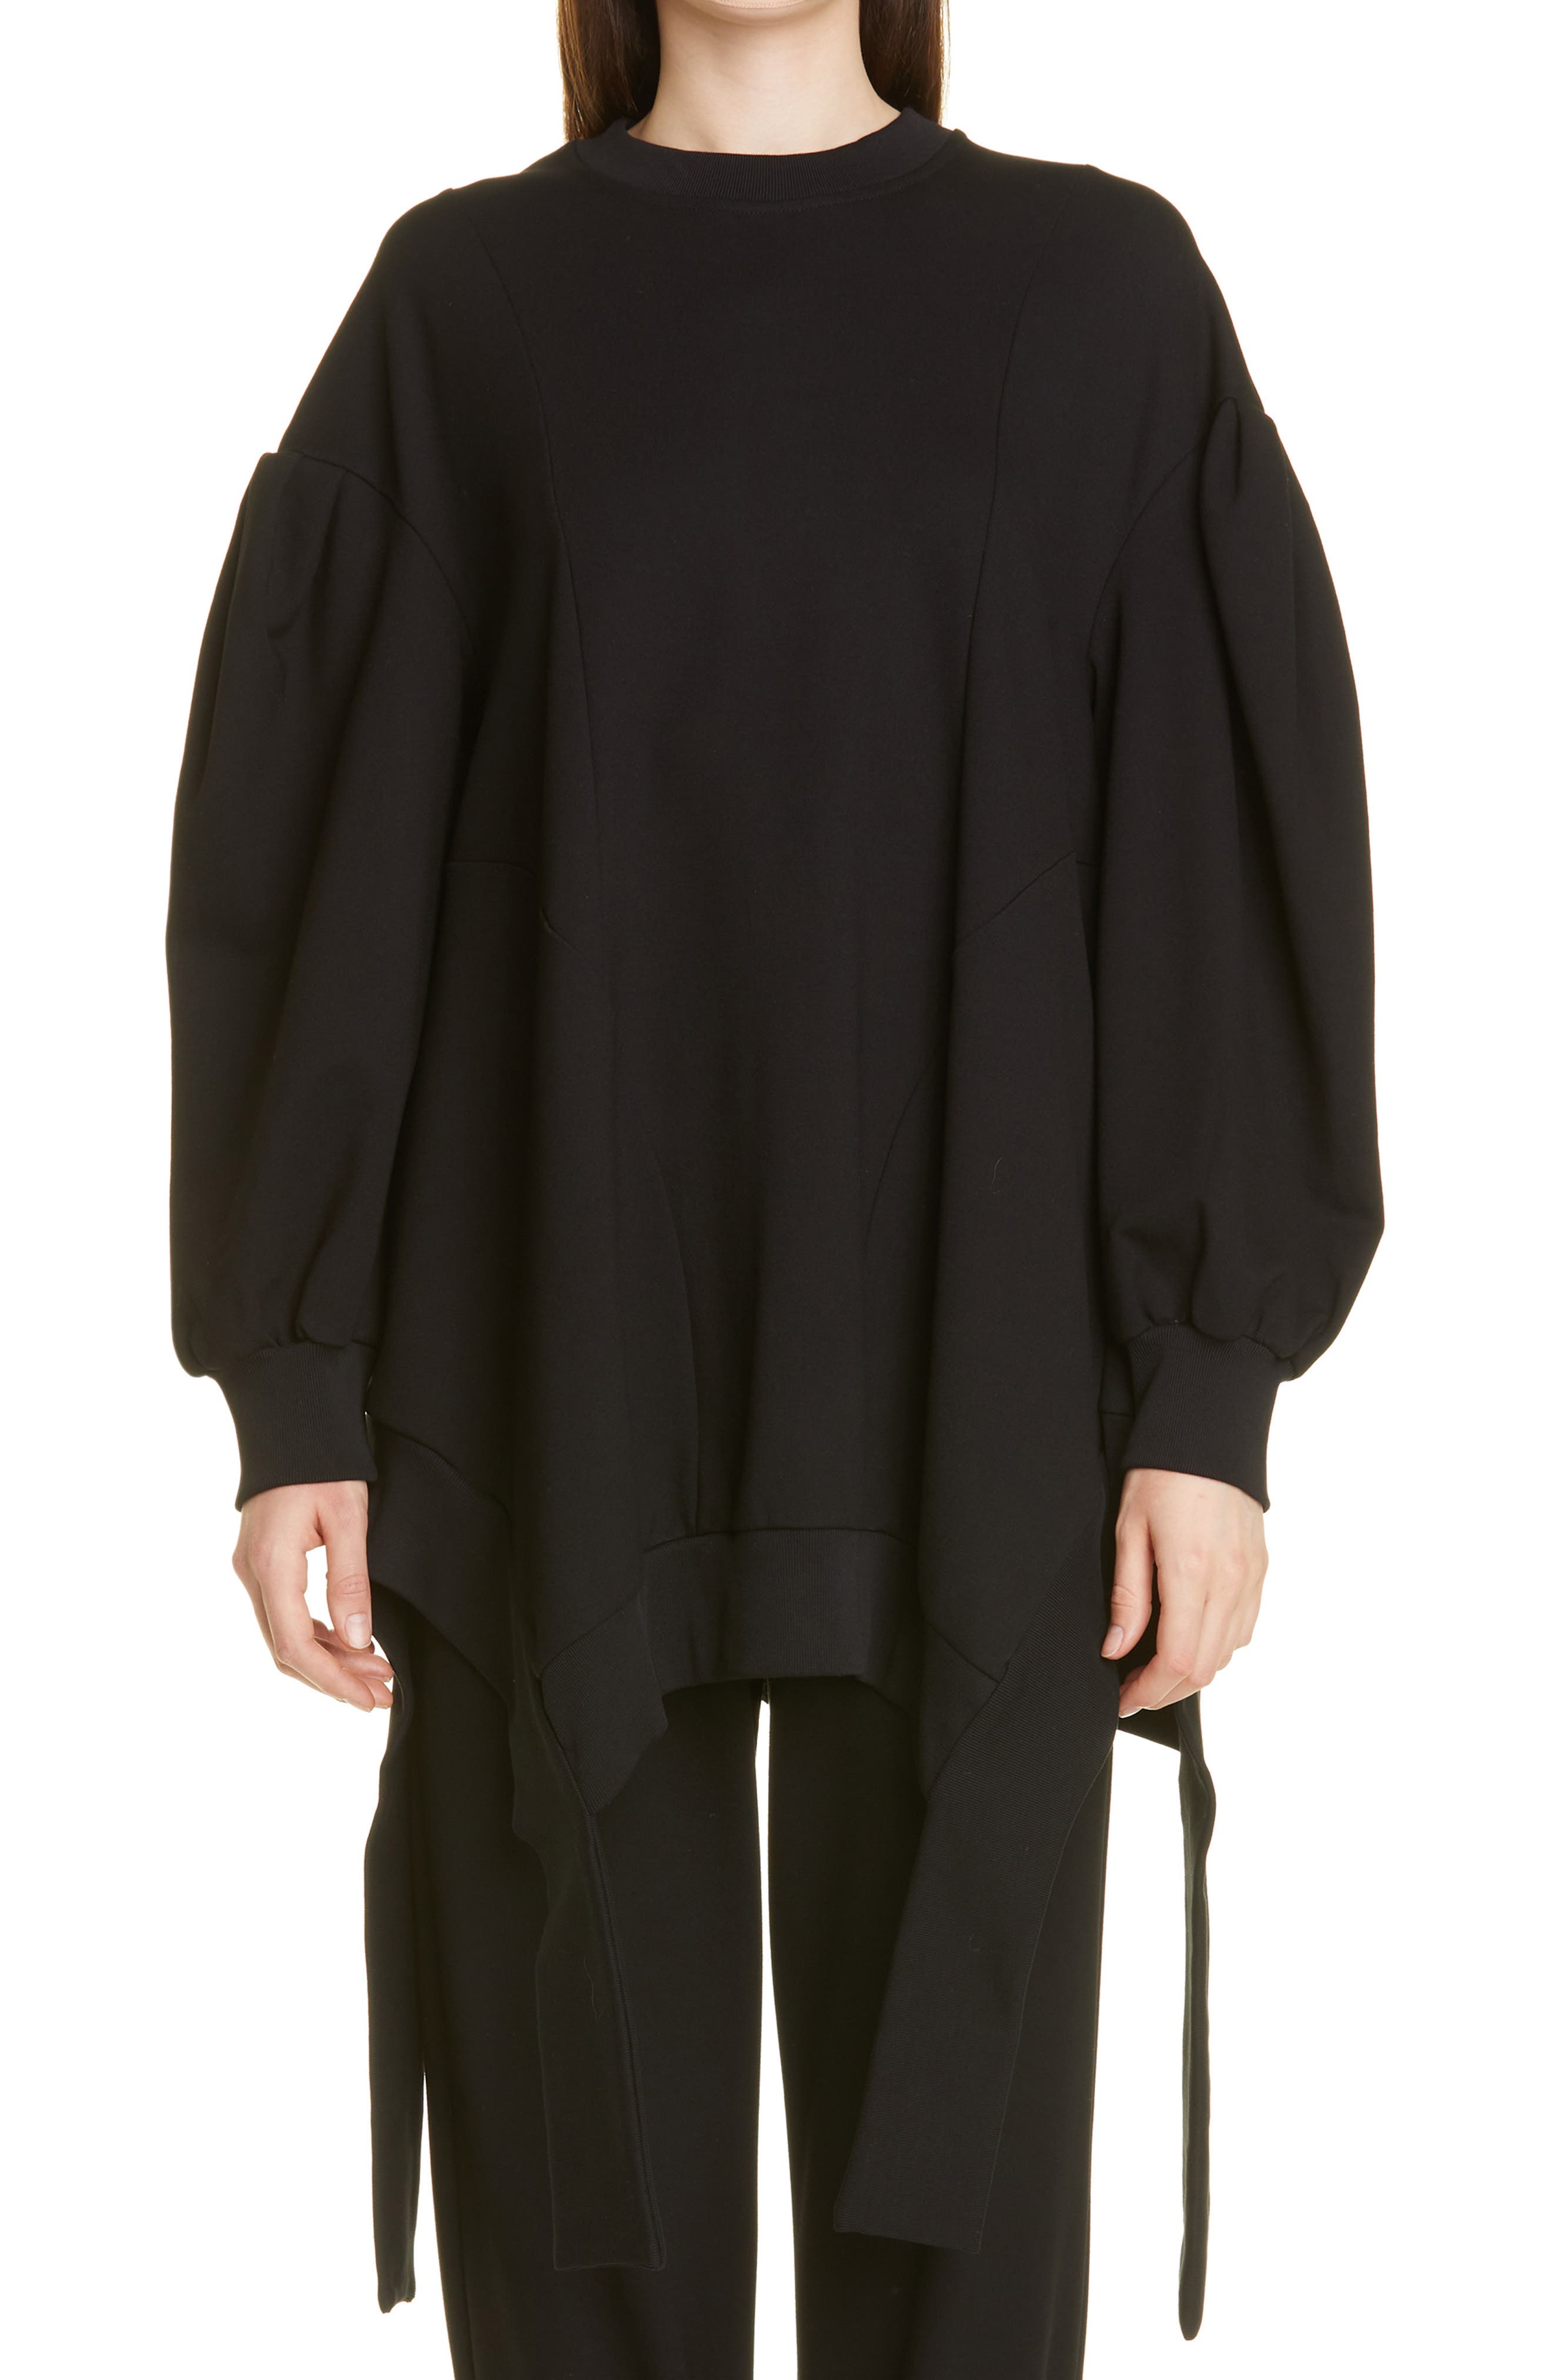 Simone Rocha Women's Signature Sleeve Button Back Sweater in Black